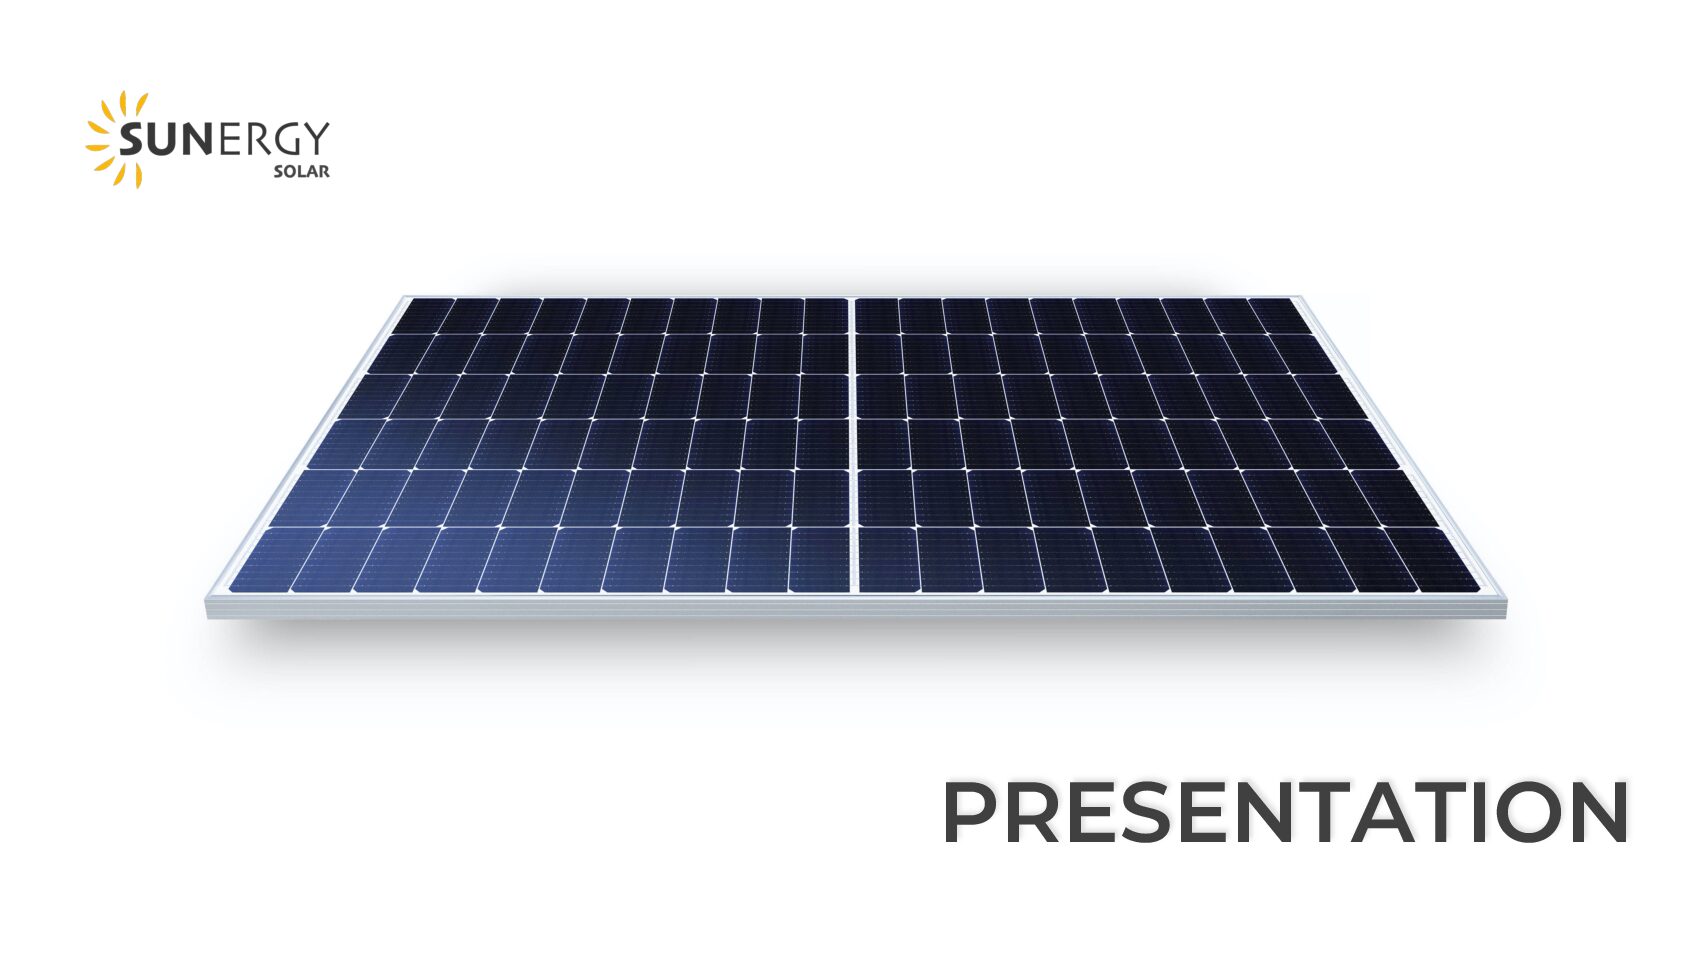 solar panel pv presentation by sunergy solar in dubai - UAE